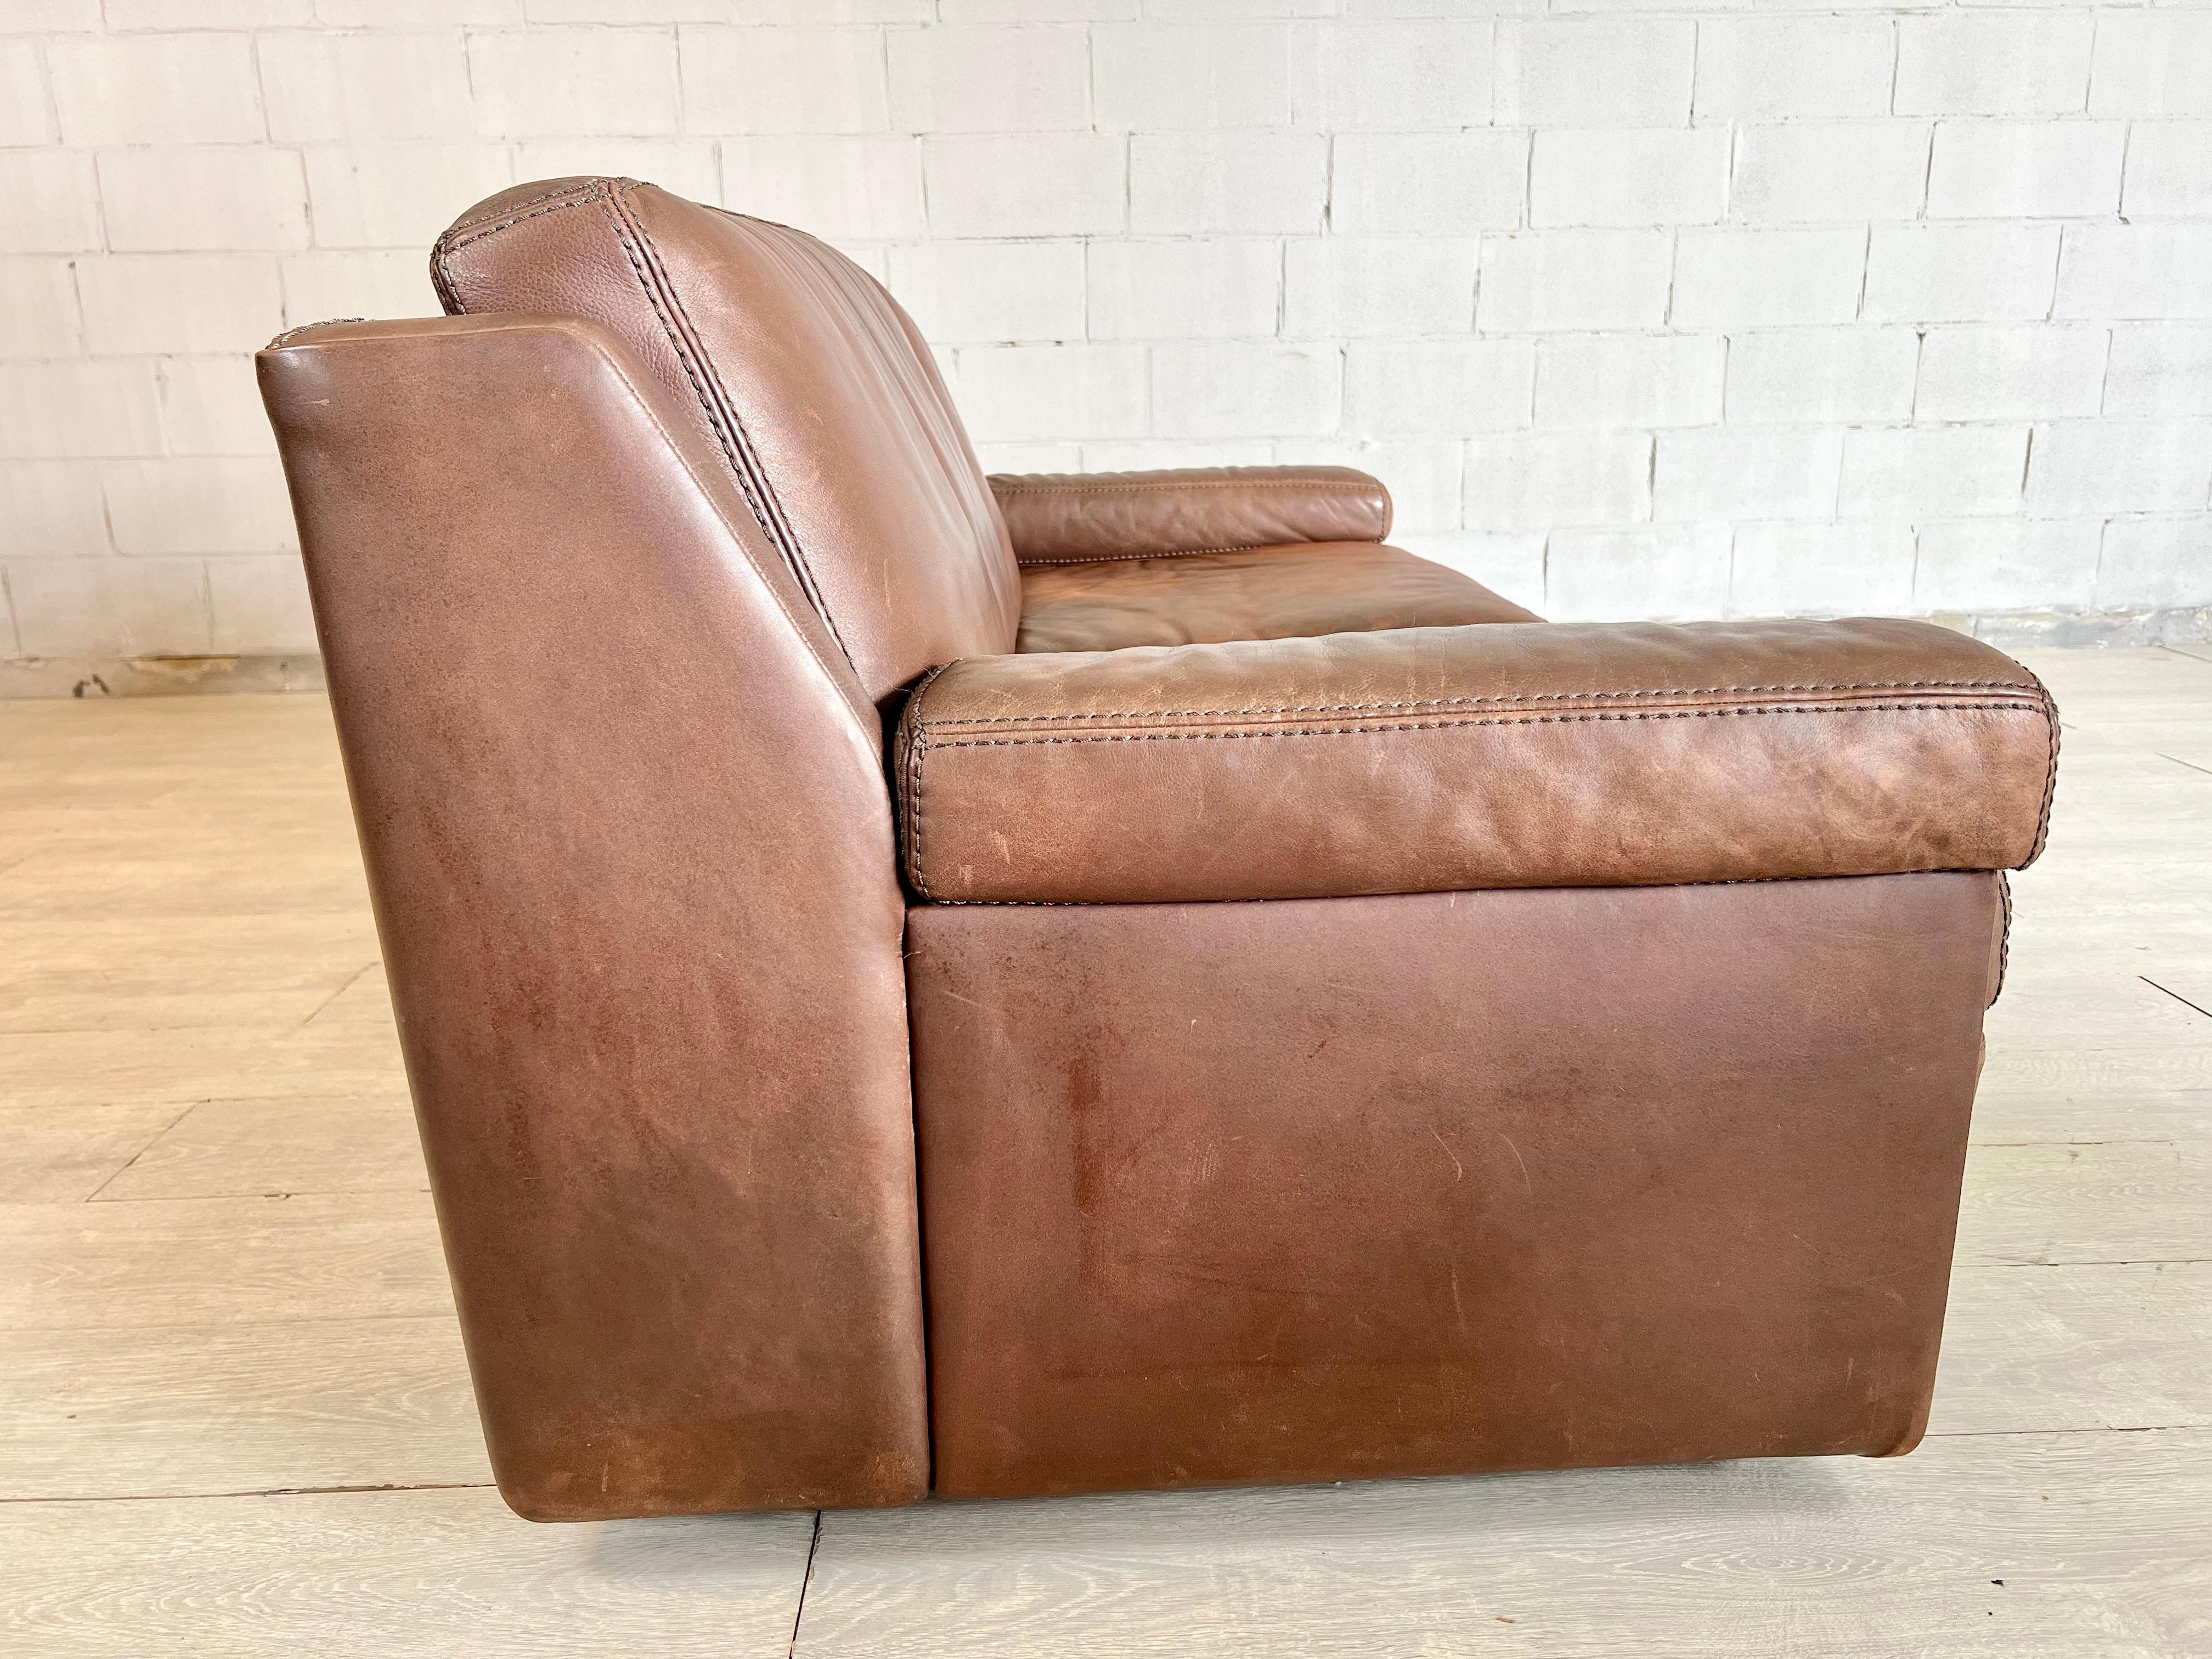 Original Vintage Modern Cognac Leather Sofa by Durlet, Belgium, 1970s For Sale 4